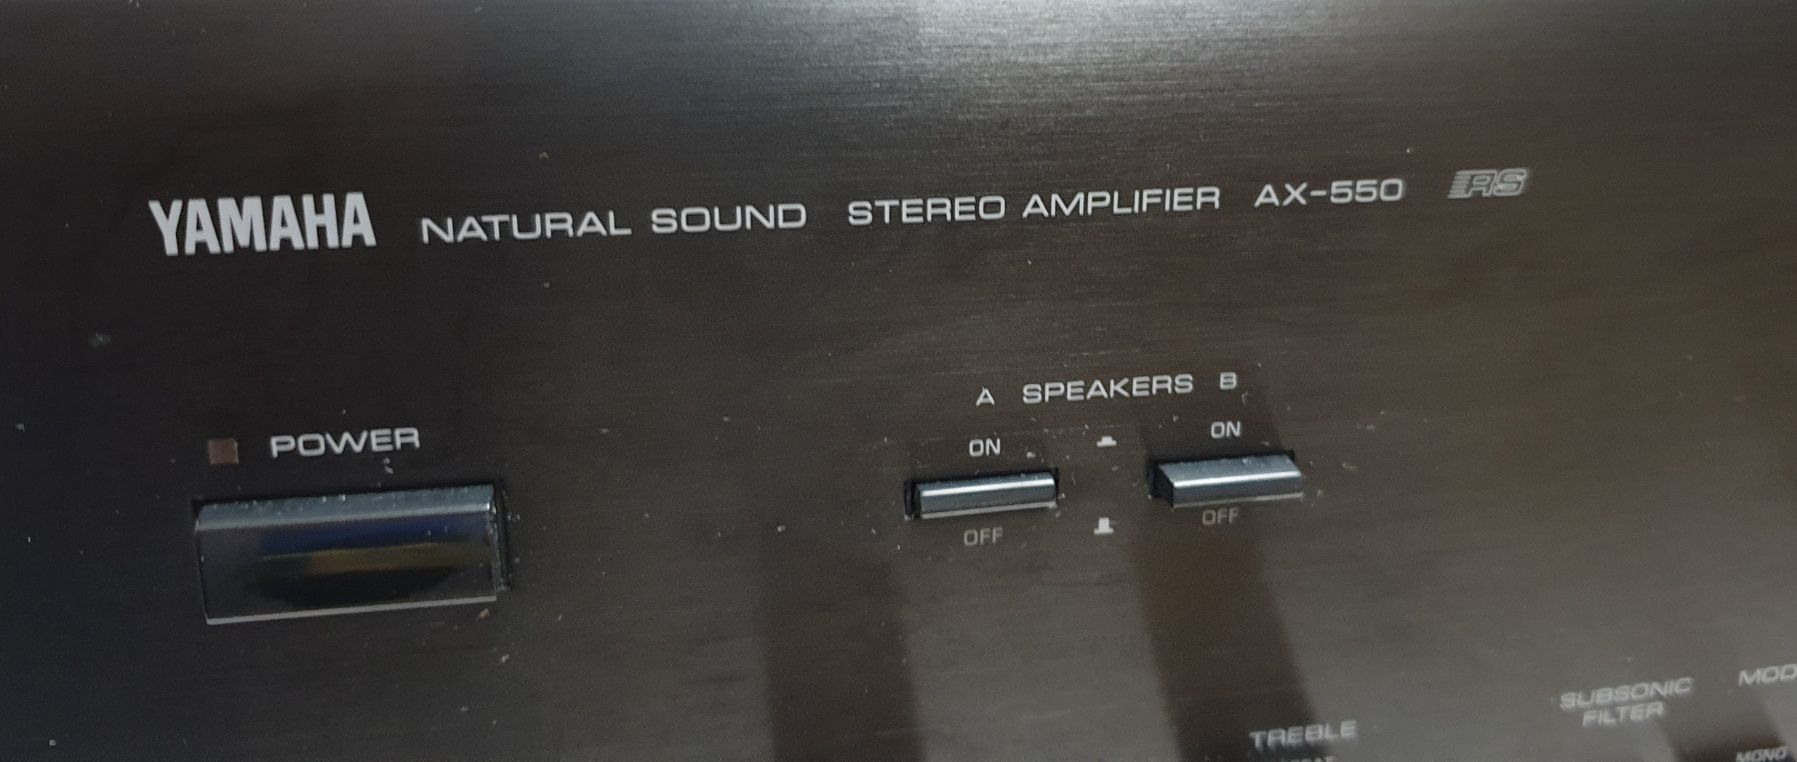 Amplificator Yamaha ax-550 rs